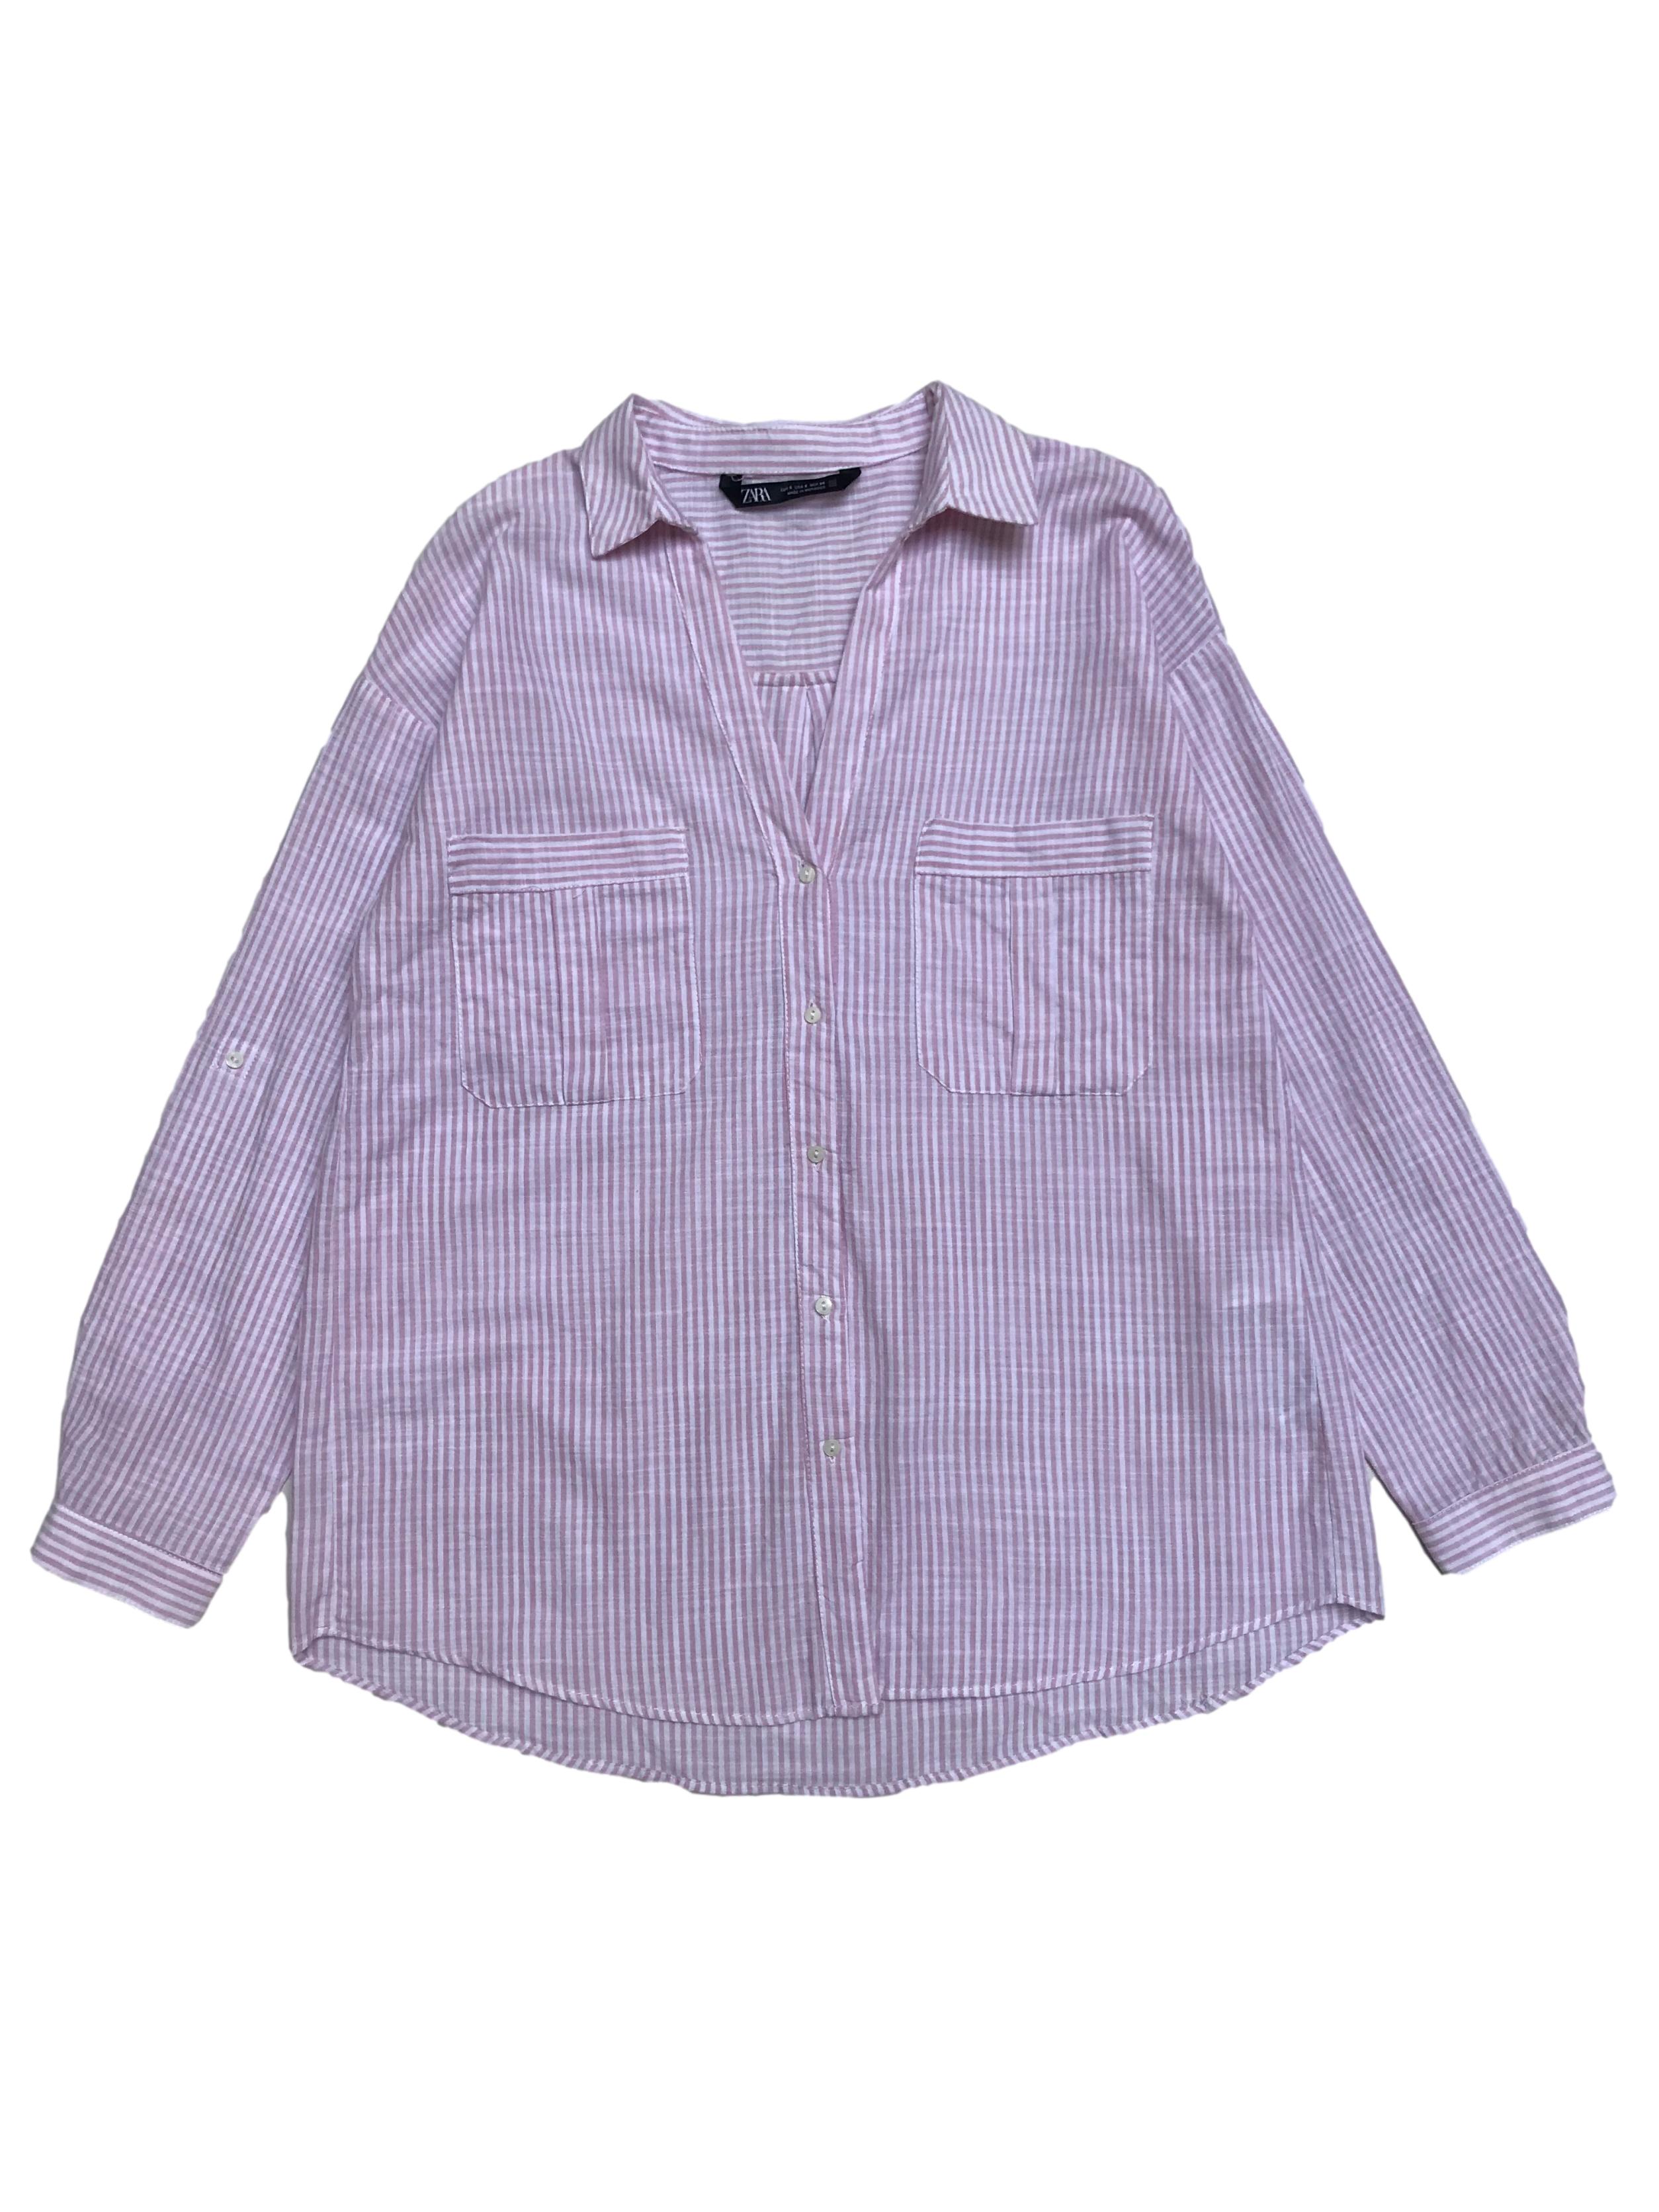 Blusa oversize Zara 100% algodón a rayas blancas y rosadas, botones y bolsillos delanteros, manga regulable con botón. Busto 100cm